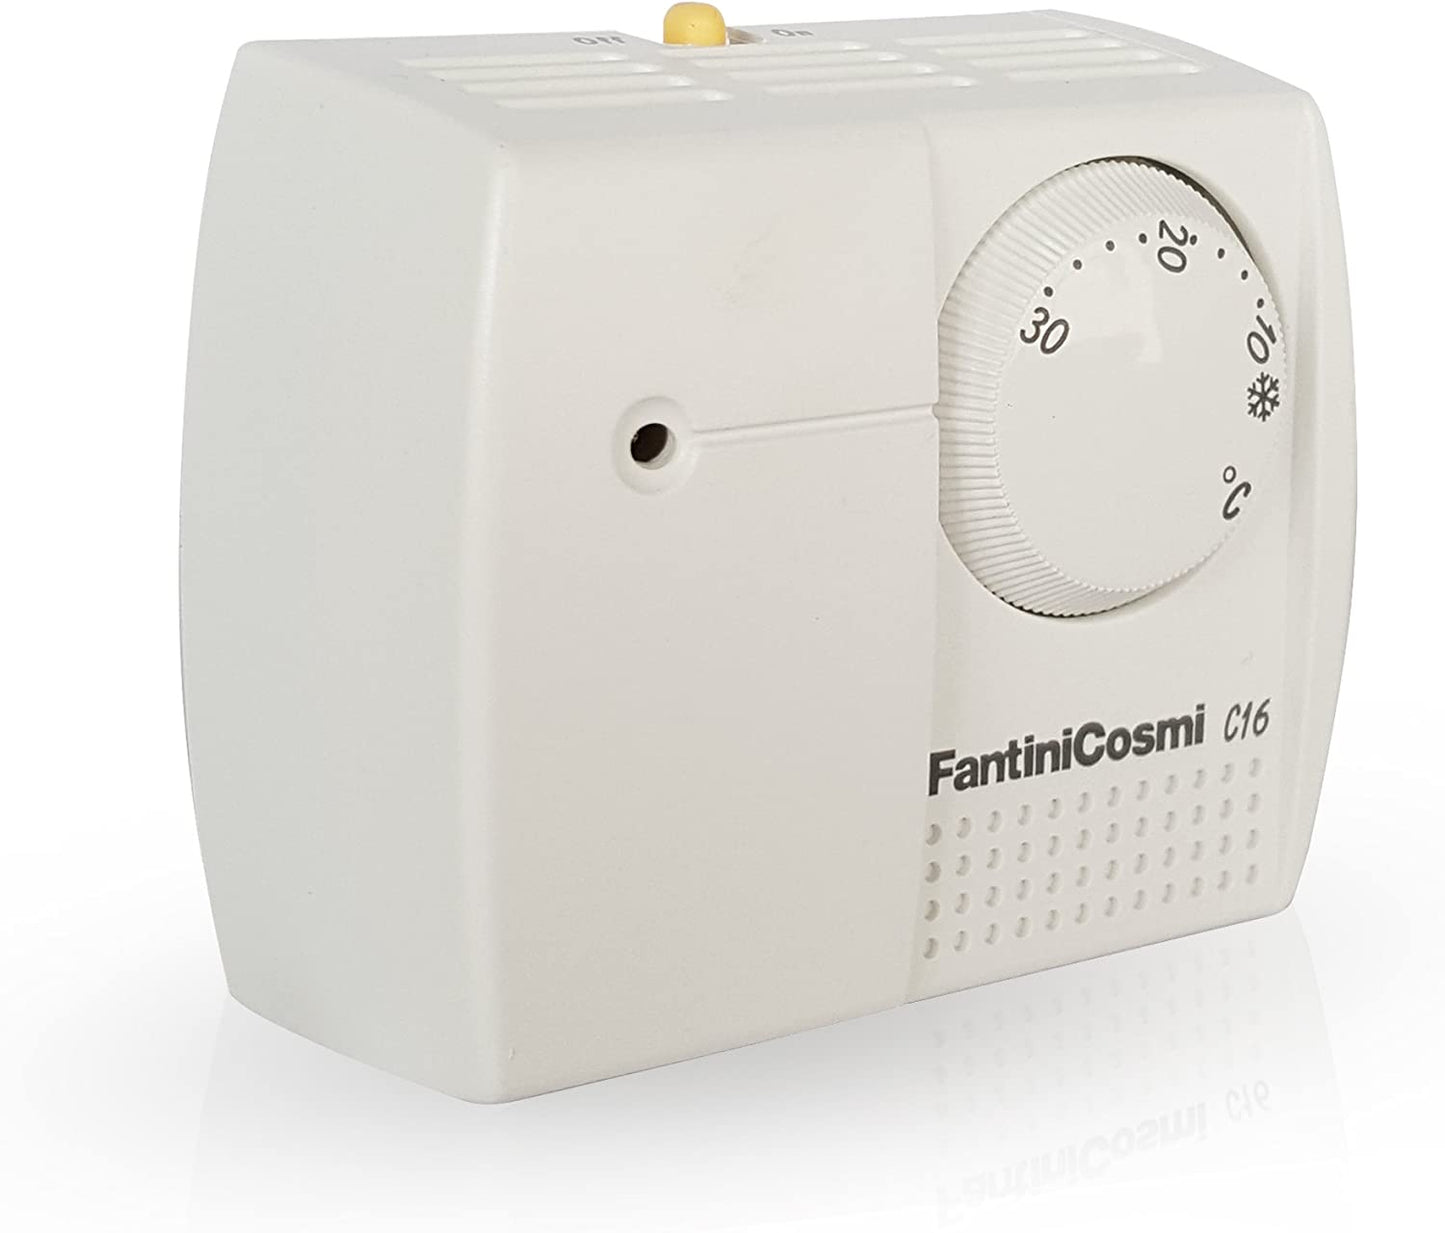 FANTINI COSMI C16IL Electromechanical Gas Expansion Thermostat with Indicator Light, White